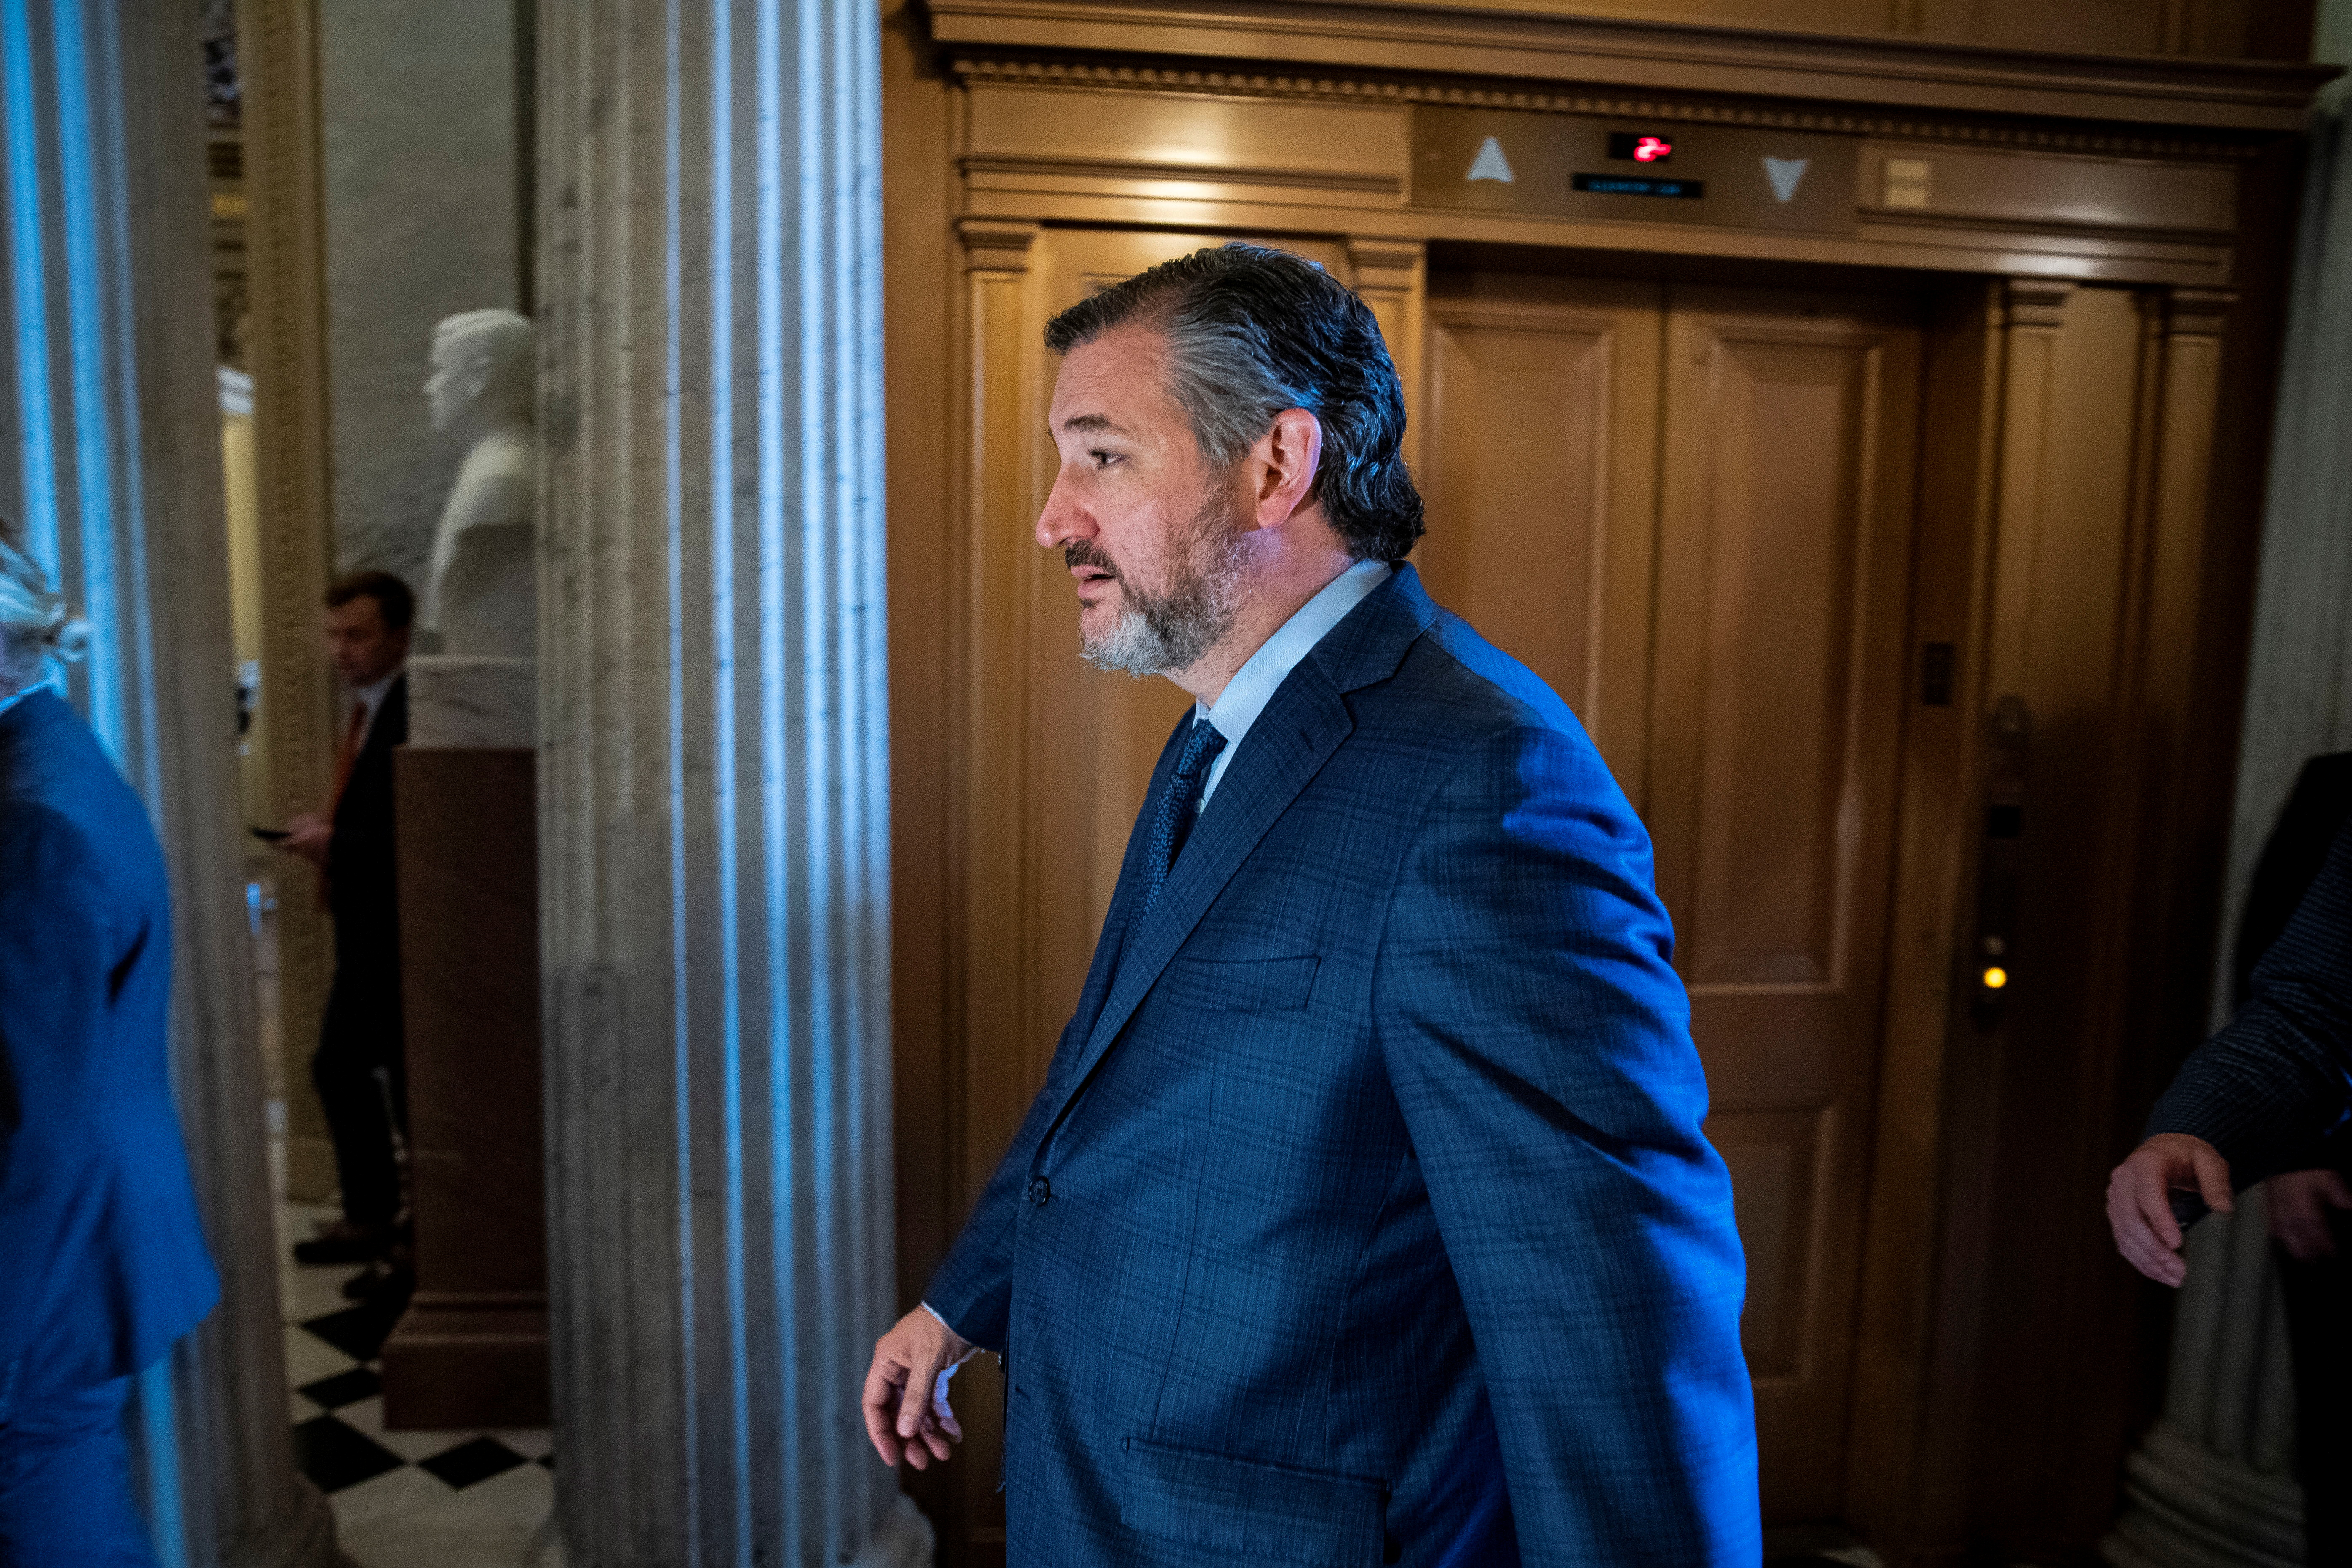 U.S. Senator Ted Cruz heads to the Senate floor for a vote in the U.S. Capitol